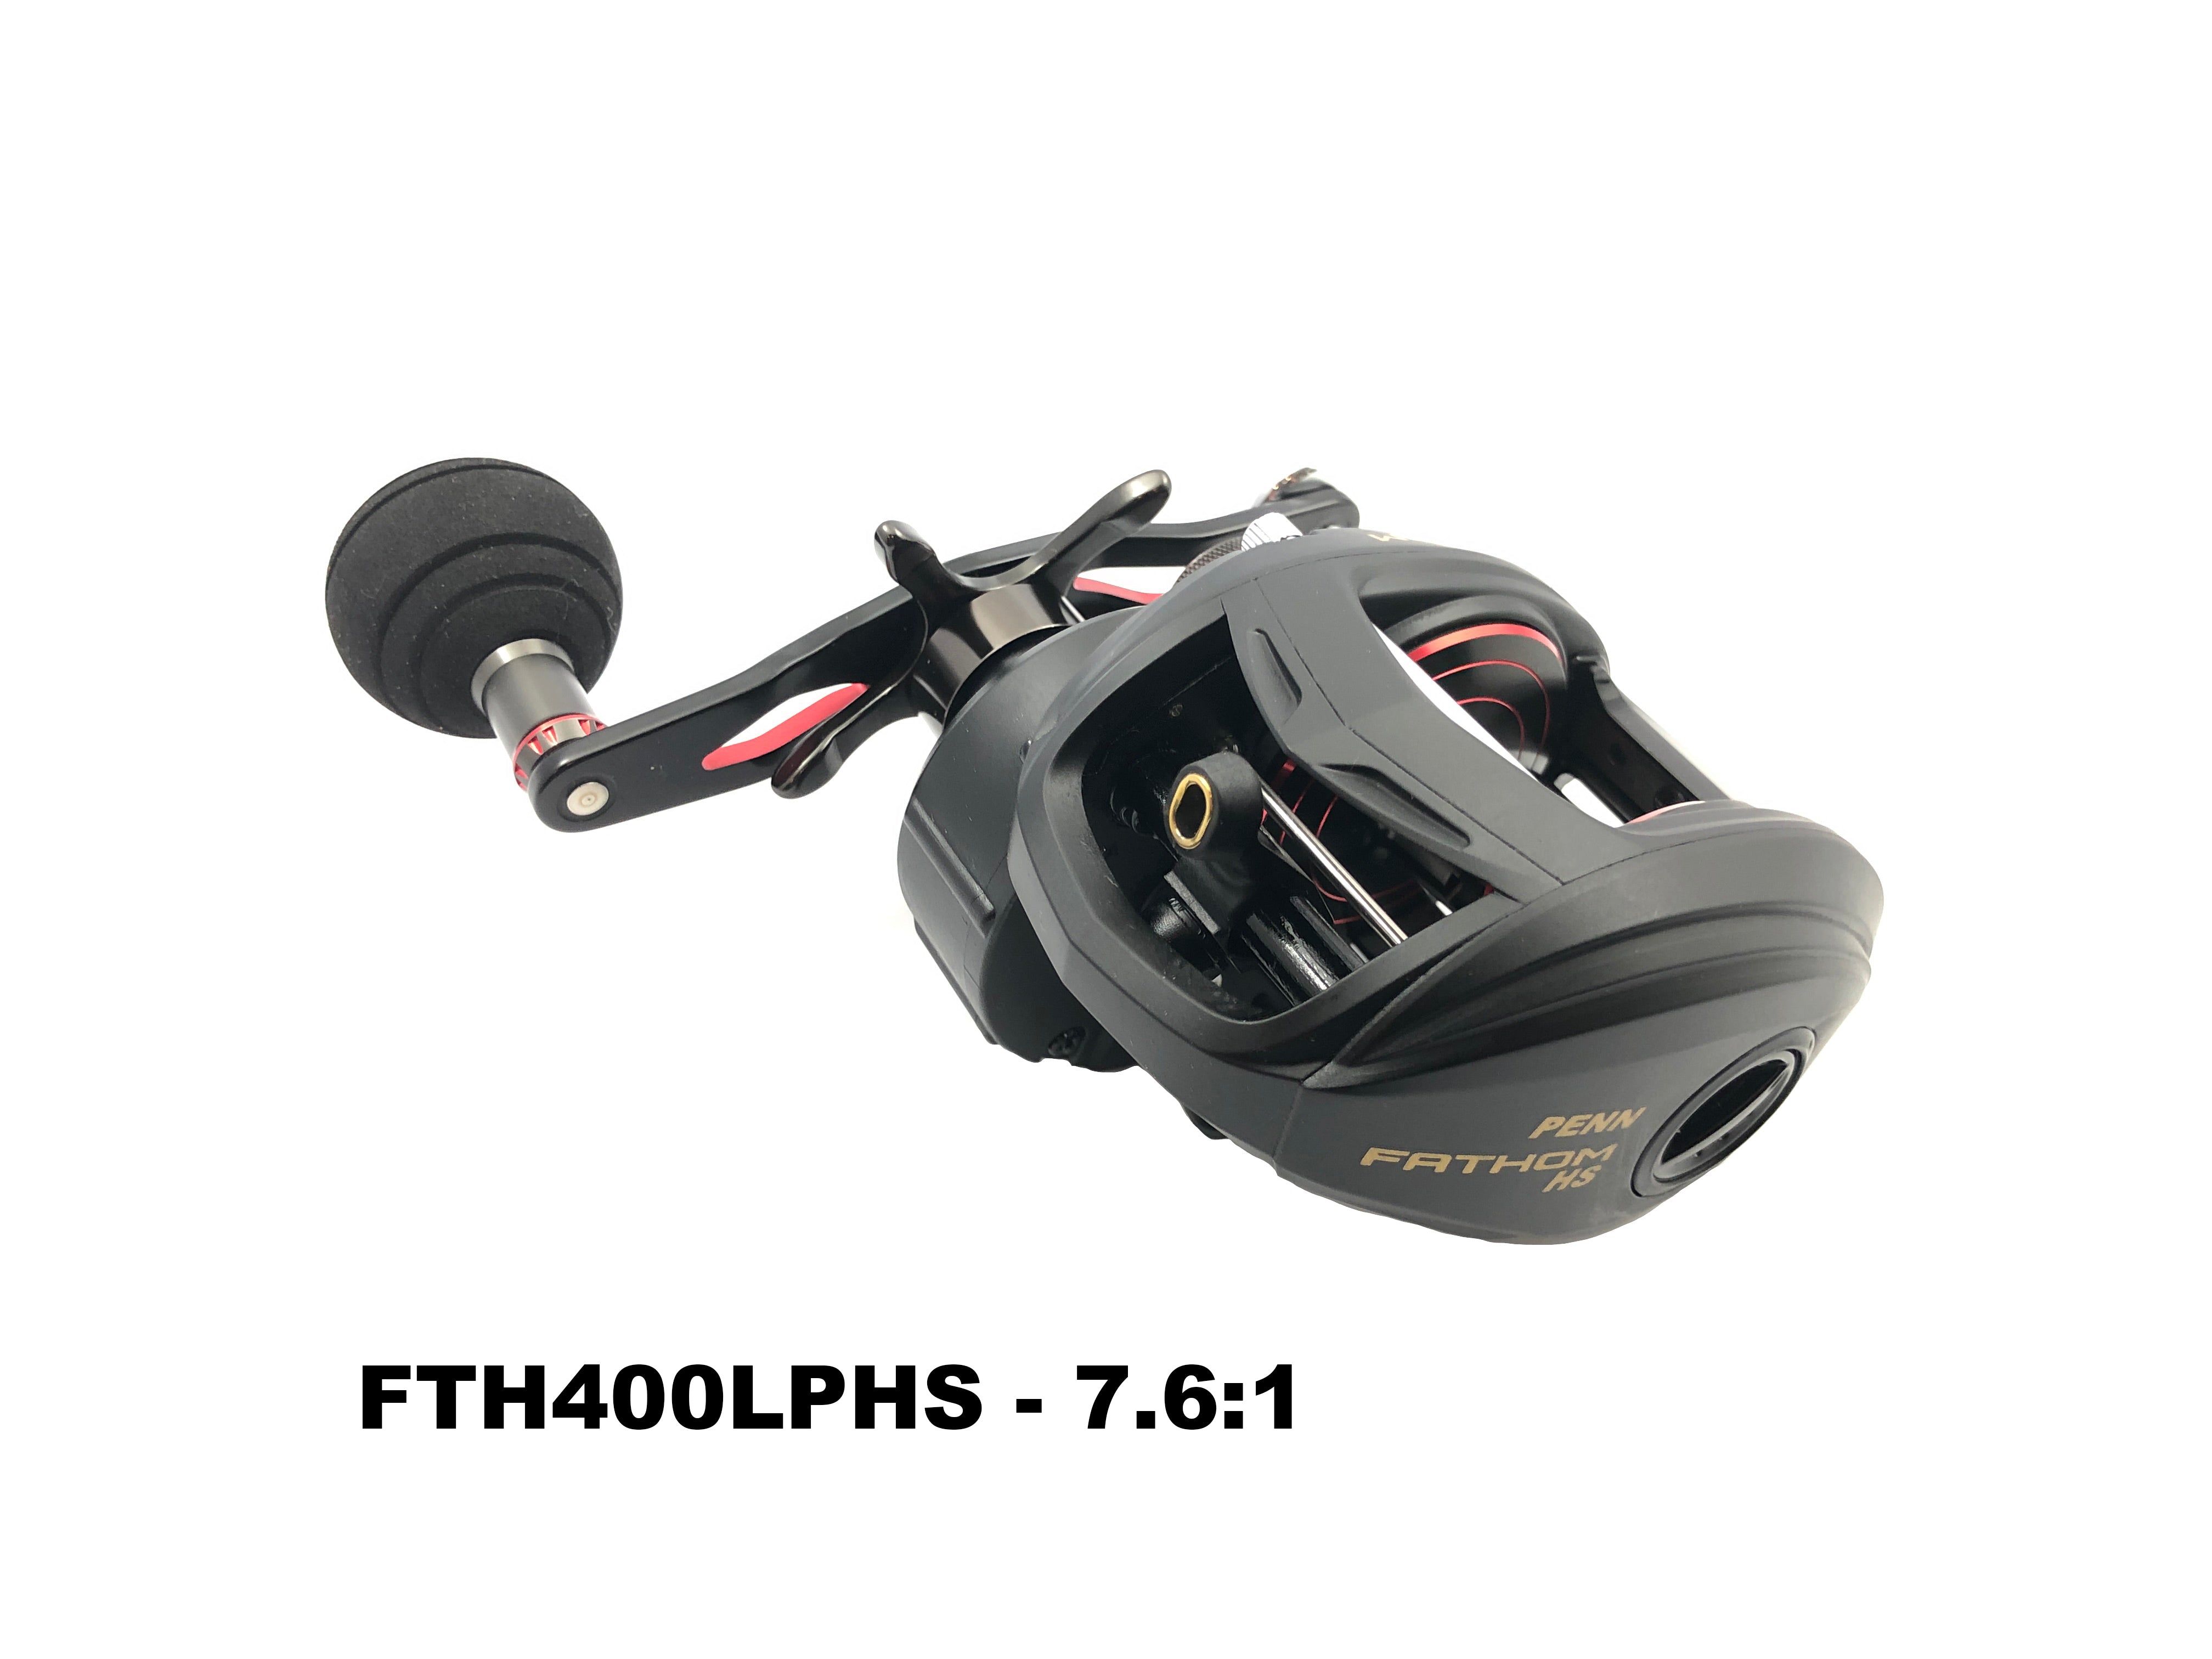 Penn Fathom High Speed Low Profile Reel (7.6:1 Gear Ratio) - FREE